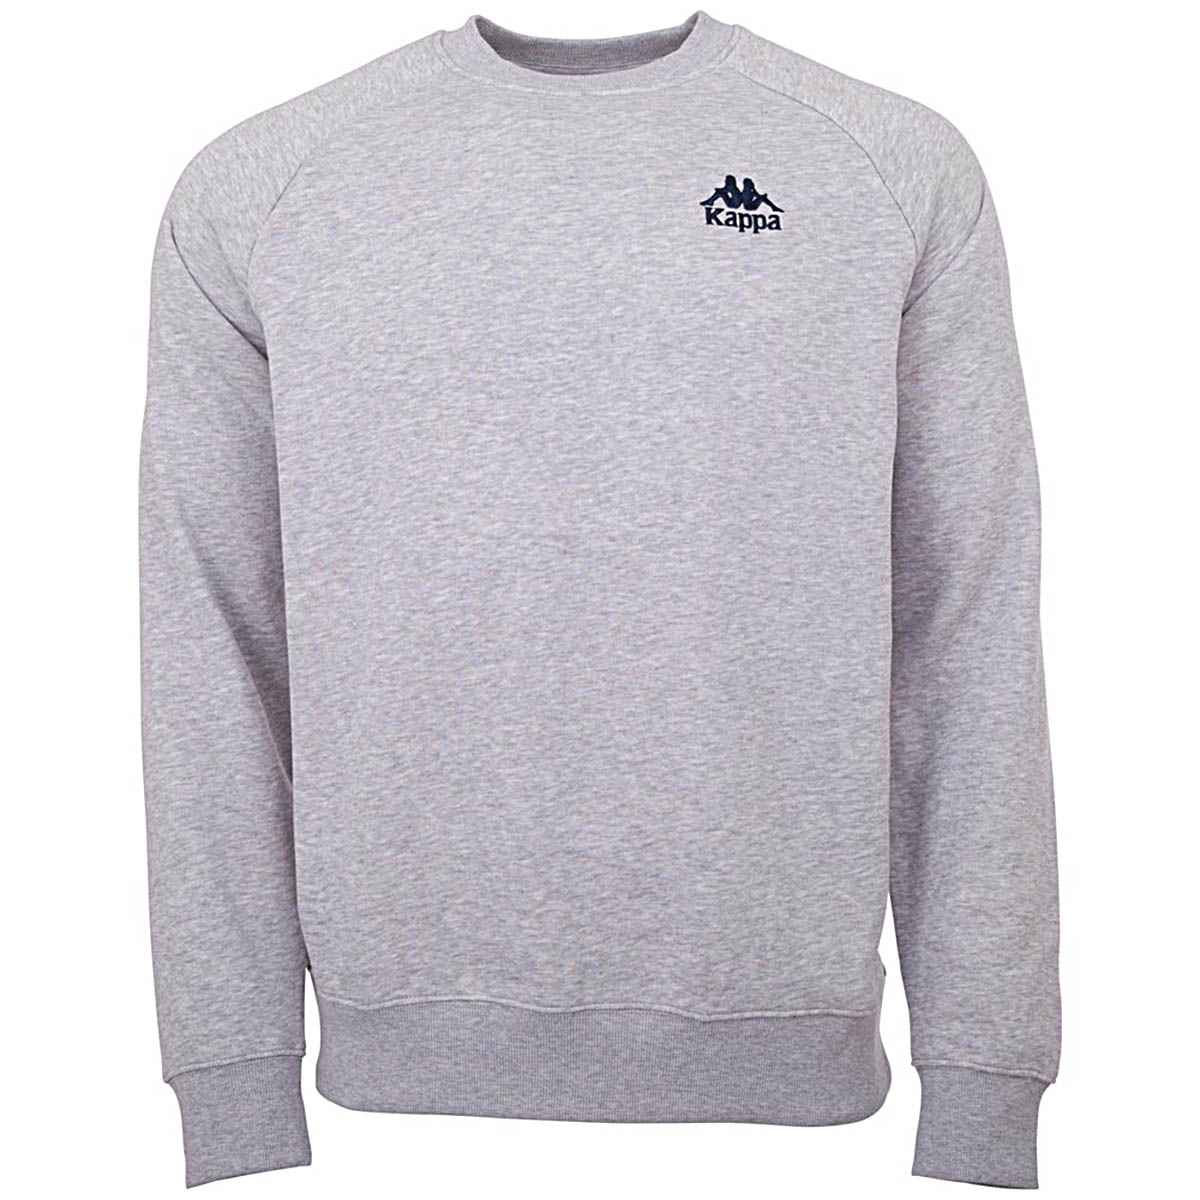 Kappa Herren Sweatshirt Authentic Taule | Langarm Shirt, Retro-Look Hoodie, Pullover Sweater Long-Shirt, Regular fit | 18M grey melange, Größe XL